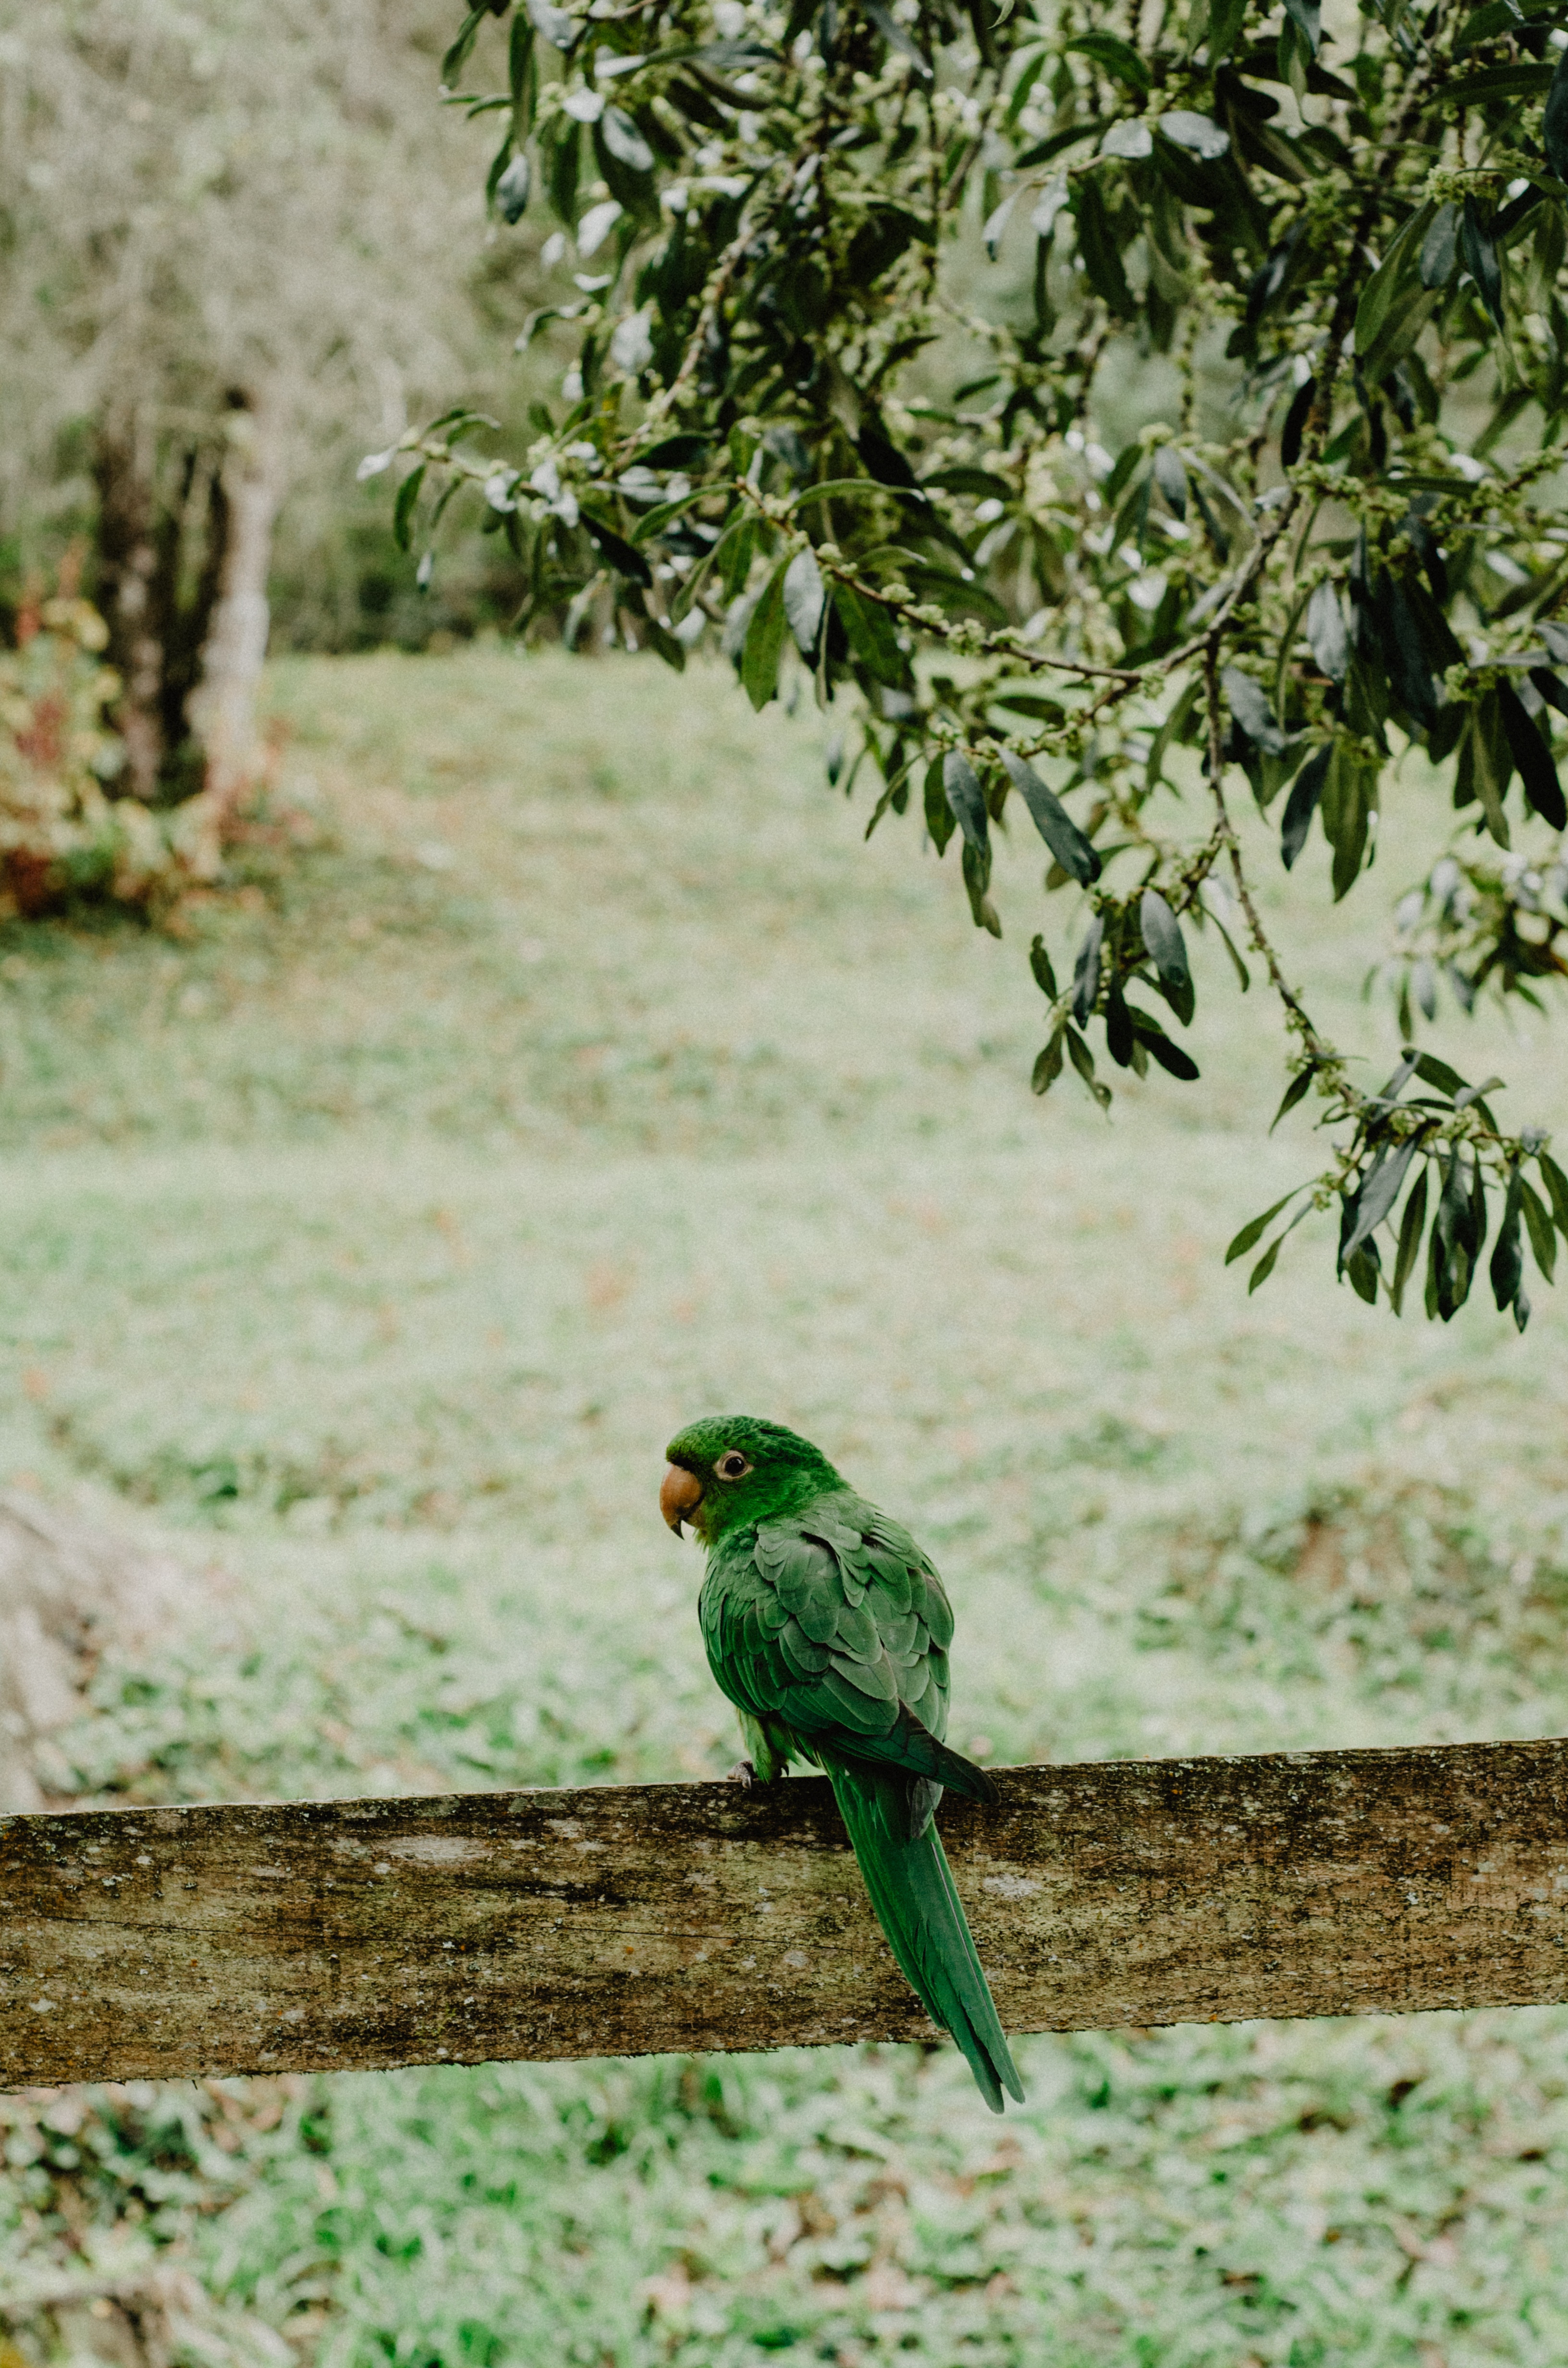 smooth, blur, animals, parrots, green, bird, branches